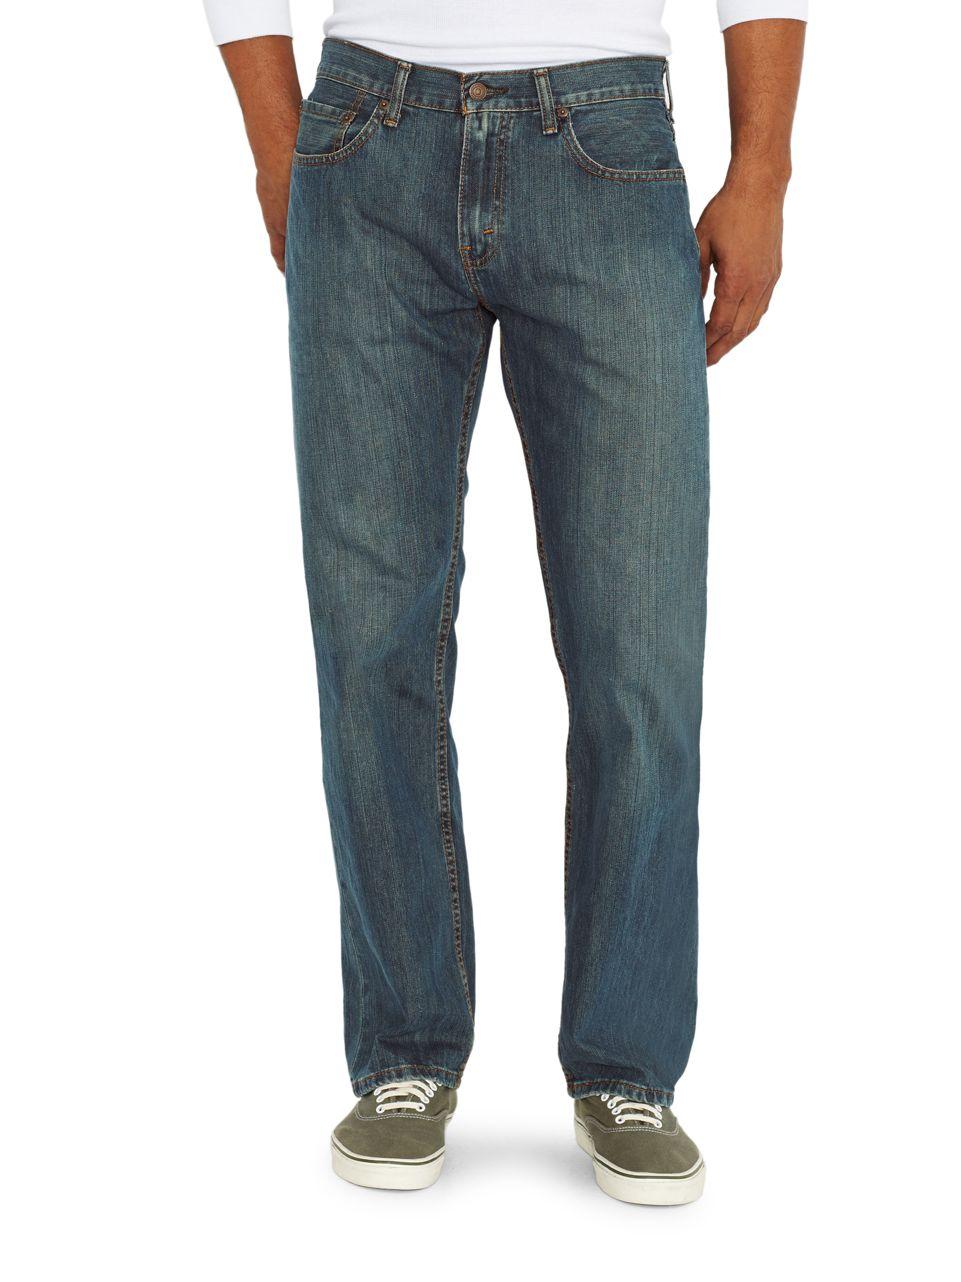 Lyst - Levi'S Big & Tall 559 Sub Zero Straight-leg Jeans in Blue for Men